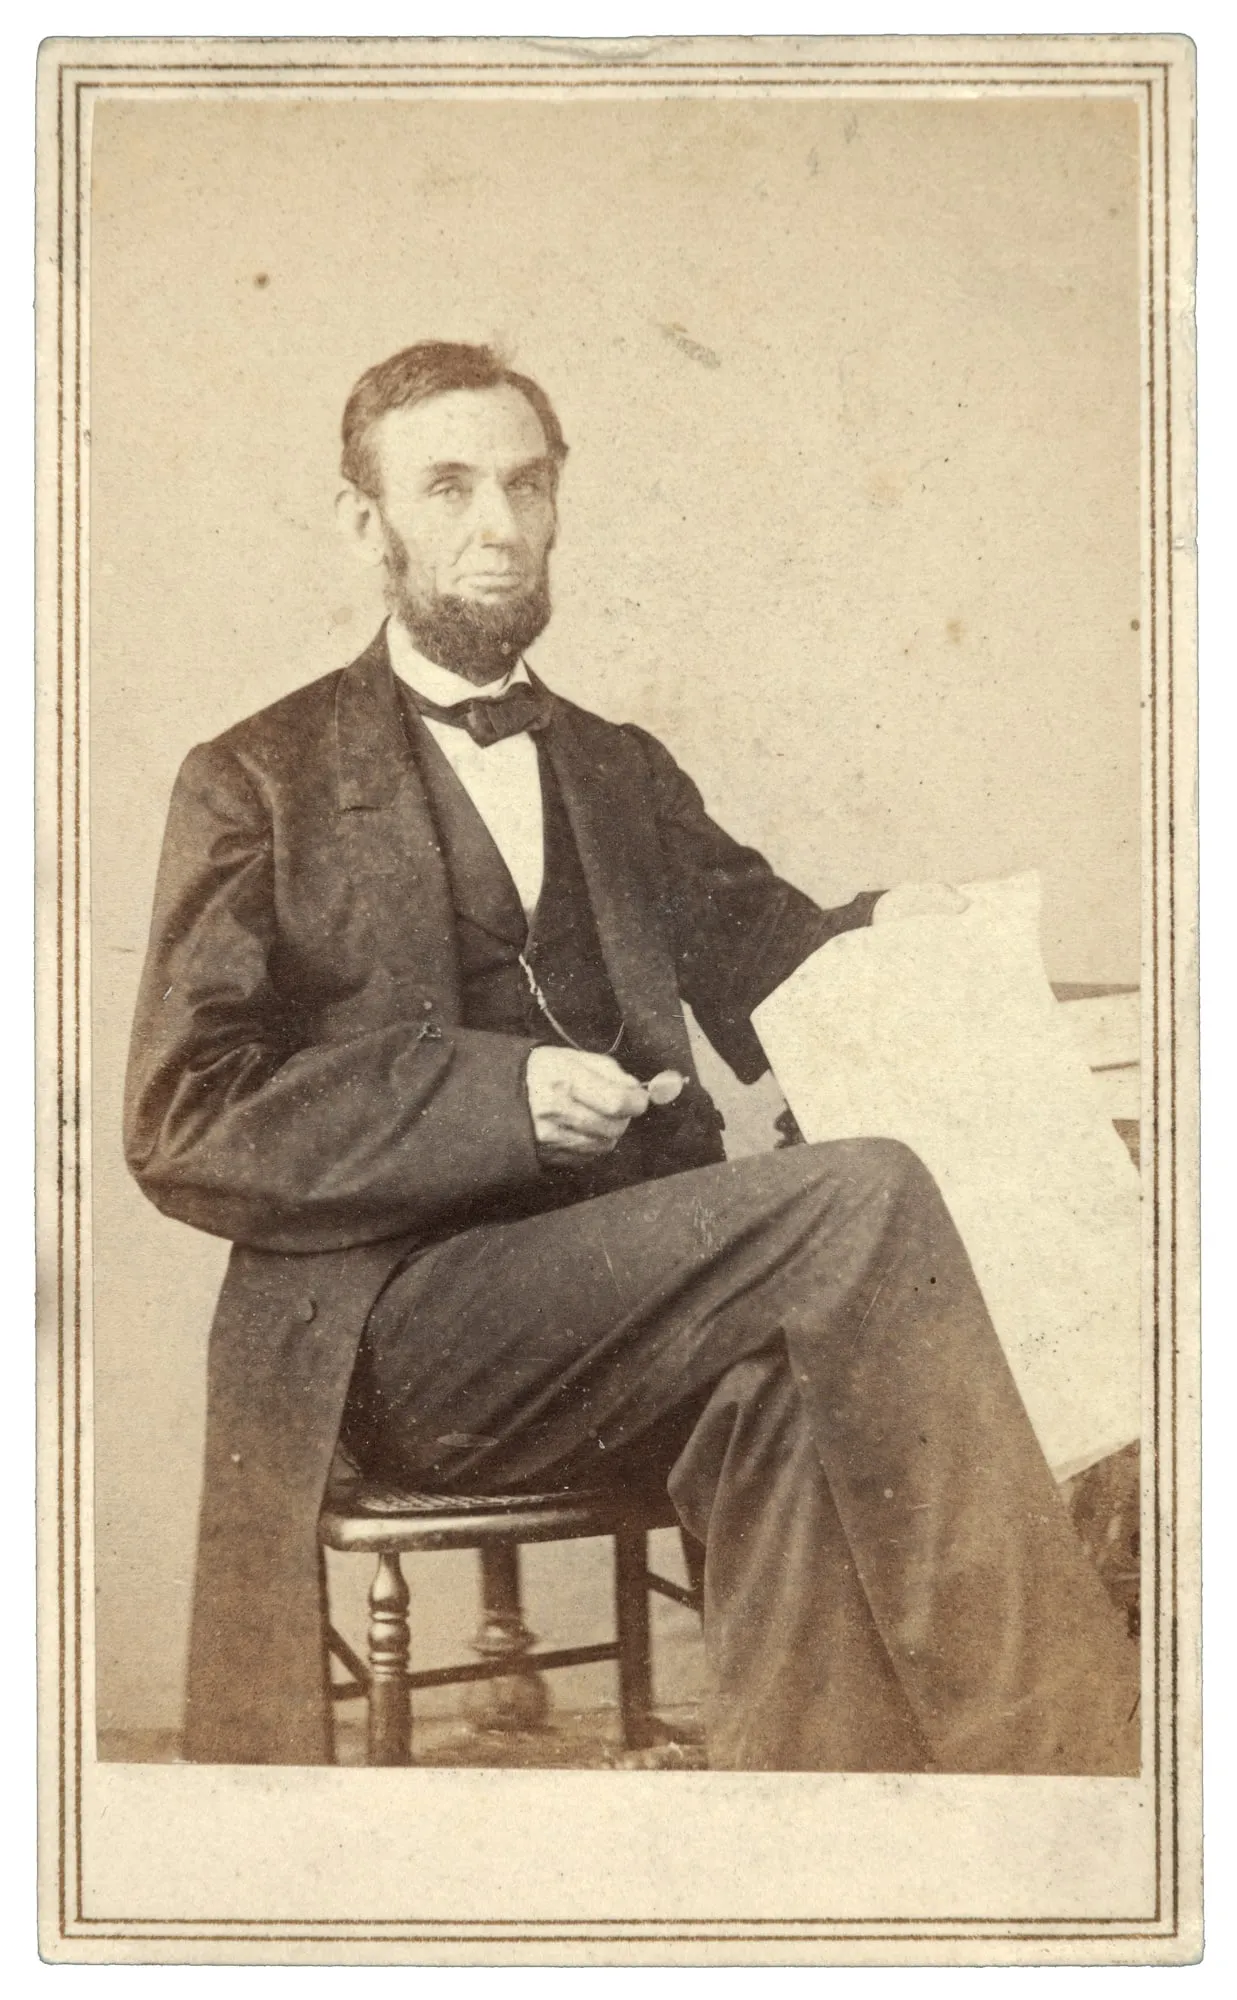 Alexander Gardner carte de visite of Abraham Lincoln dating to 1863, estimated at $700-$1,000 at PBA Galleries.